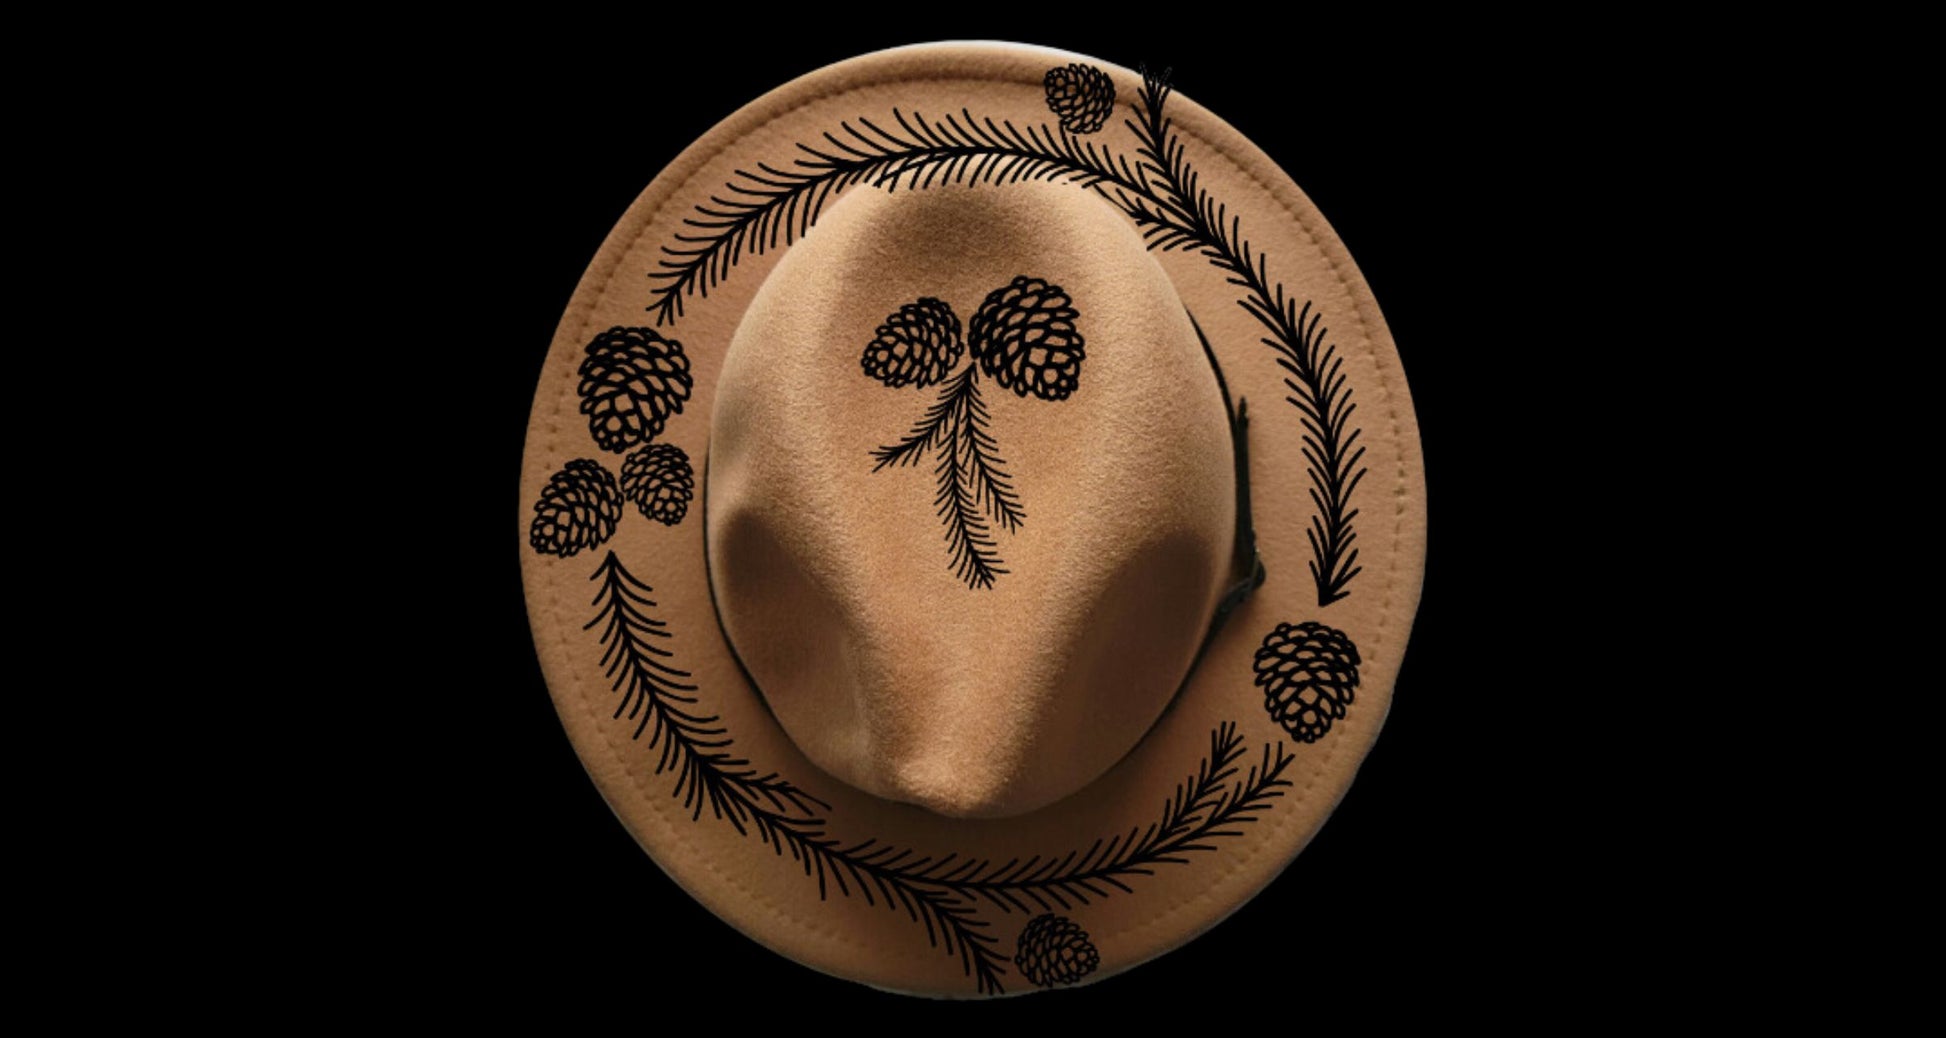 Pine Wreath design on a narrow brim hat